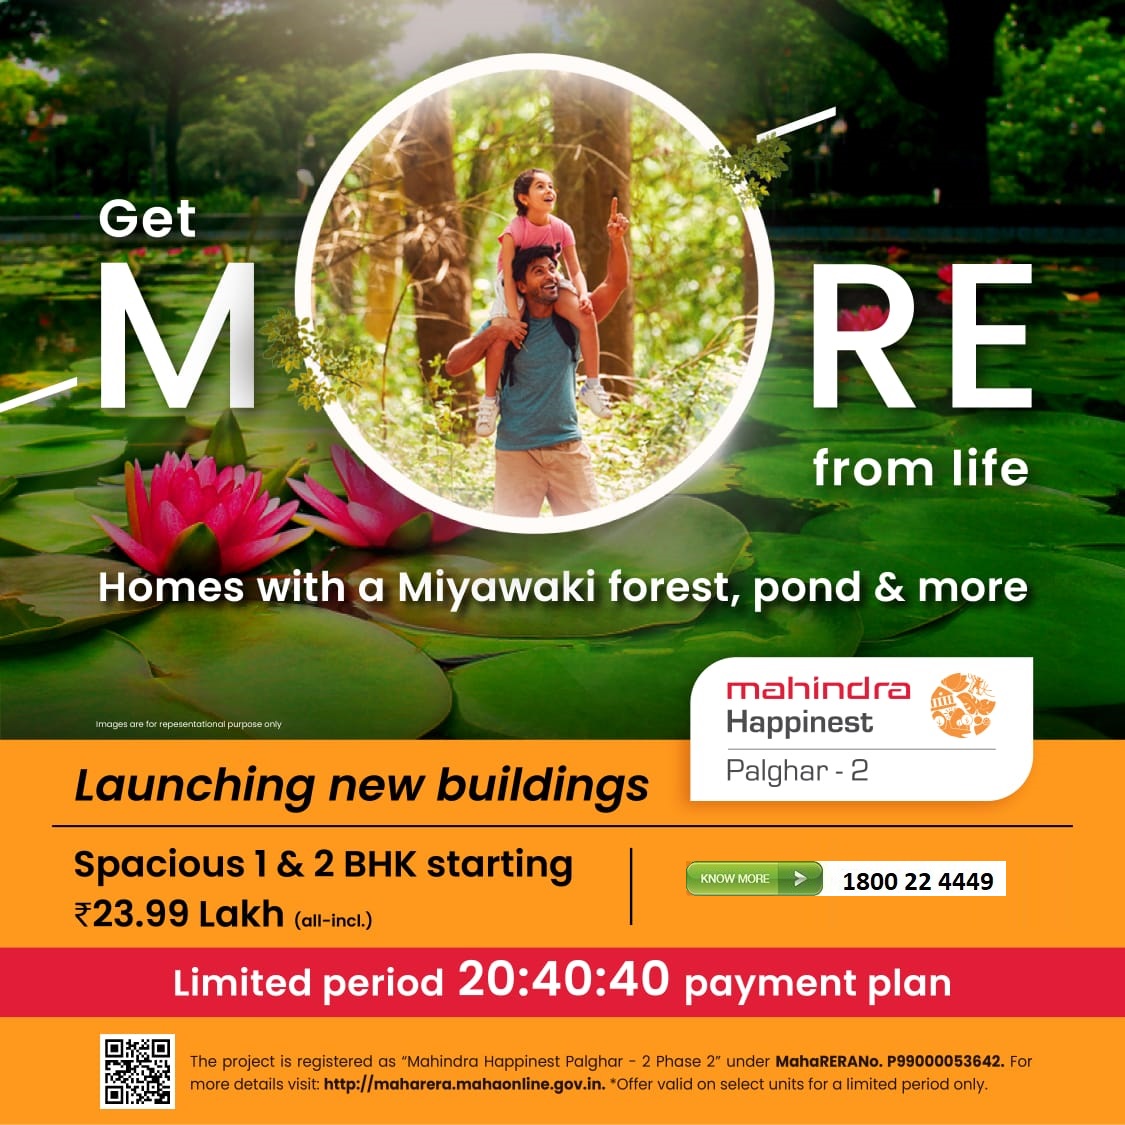 MAHINDRA HAPPINEST MYWAKI FOREST 1800224449